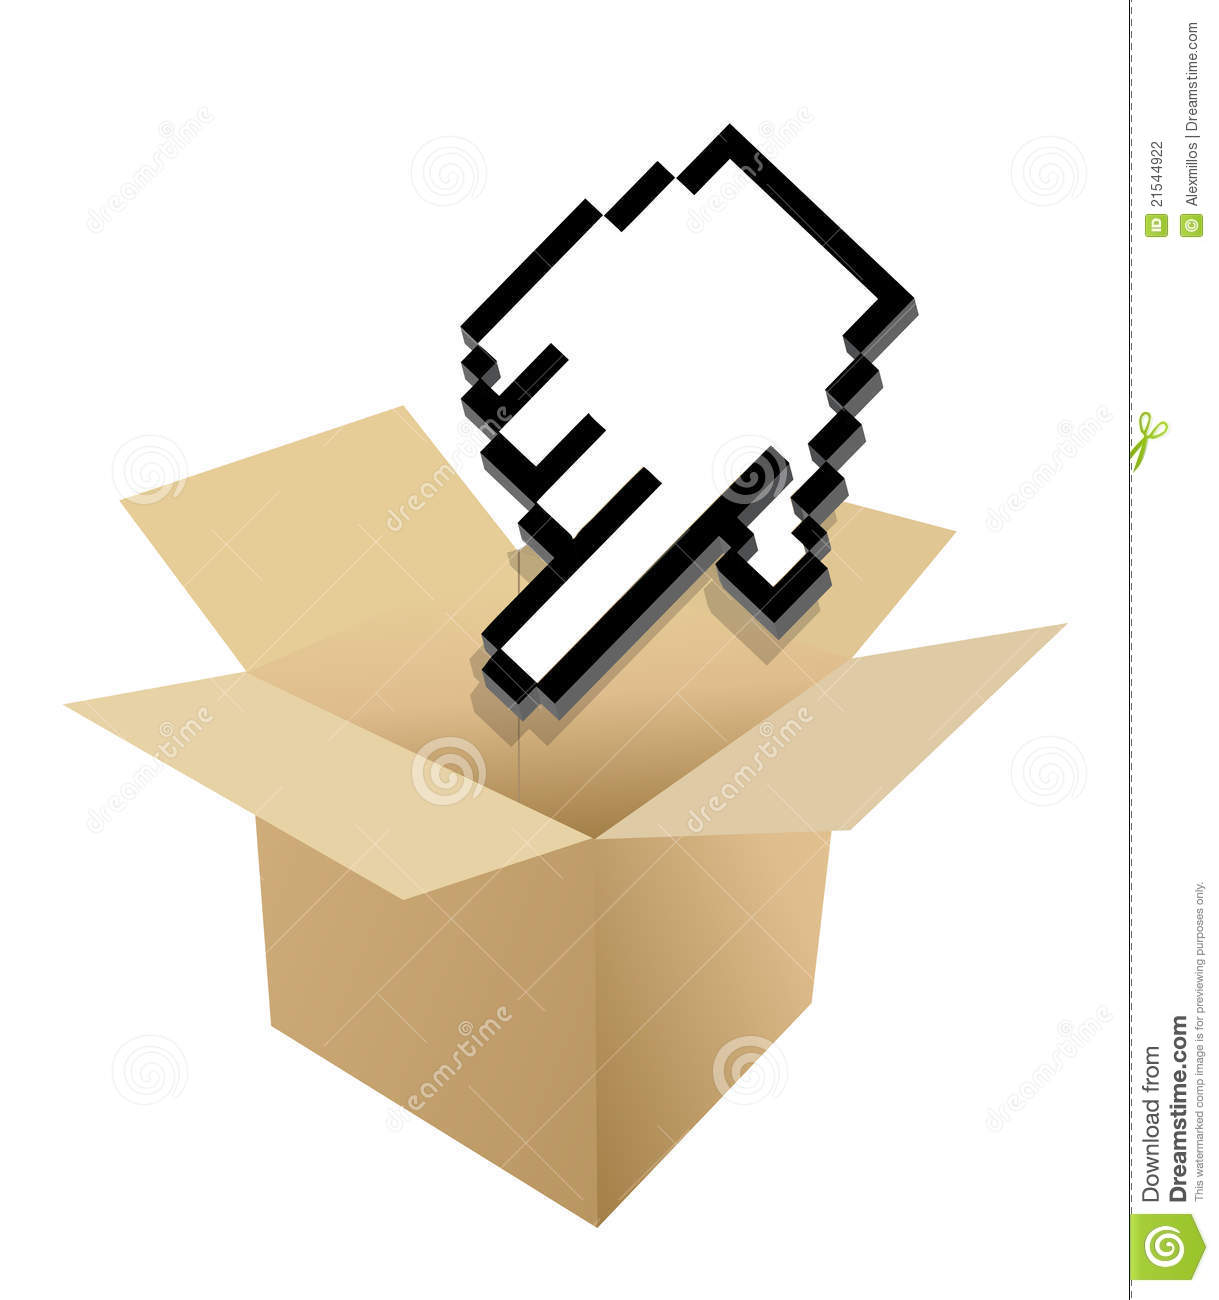 Hand Cursor And Shipping Box Illustration Stock Photography   Image